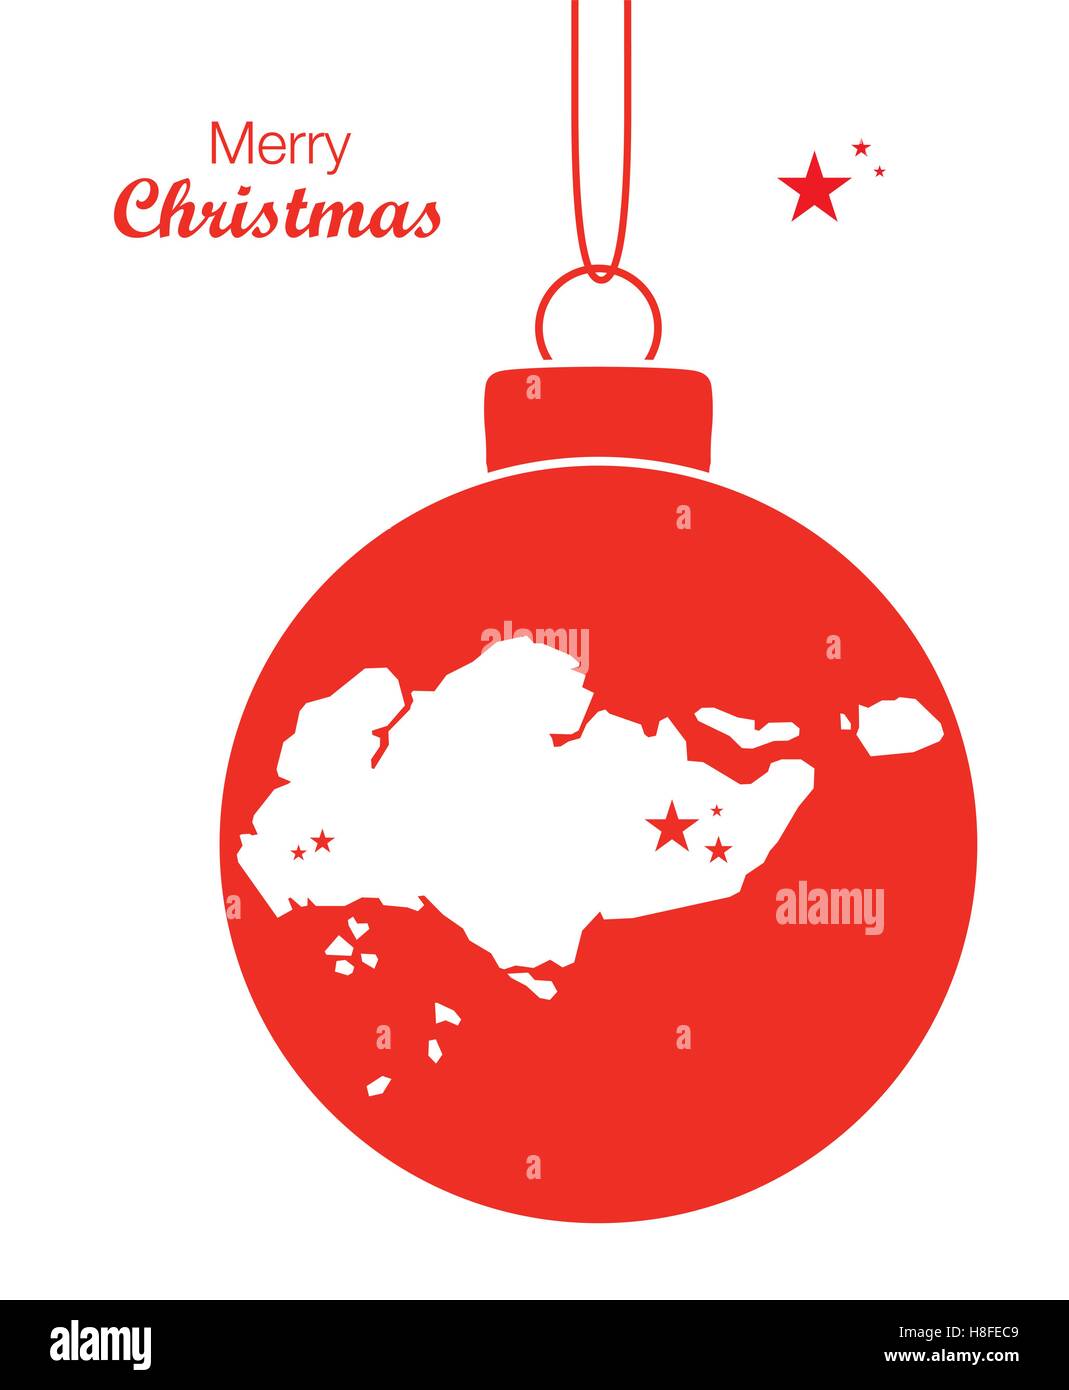 Merry Christmas Map Singapore Stock Vector Art & Illustration, Vector Image: 125730425 - Alamy